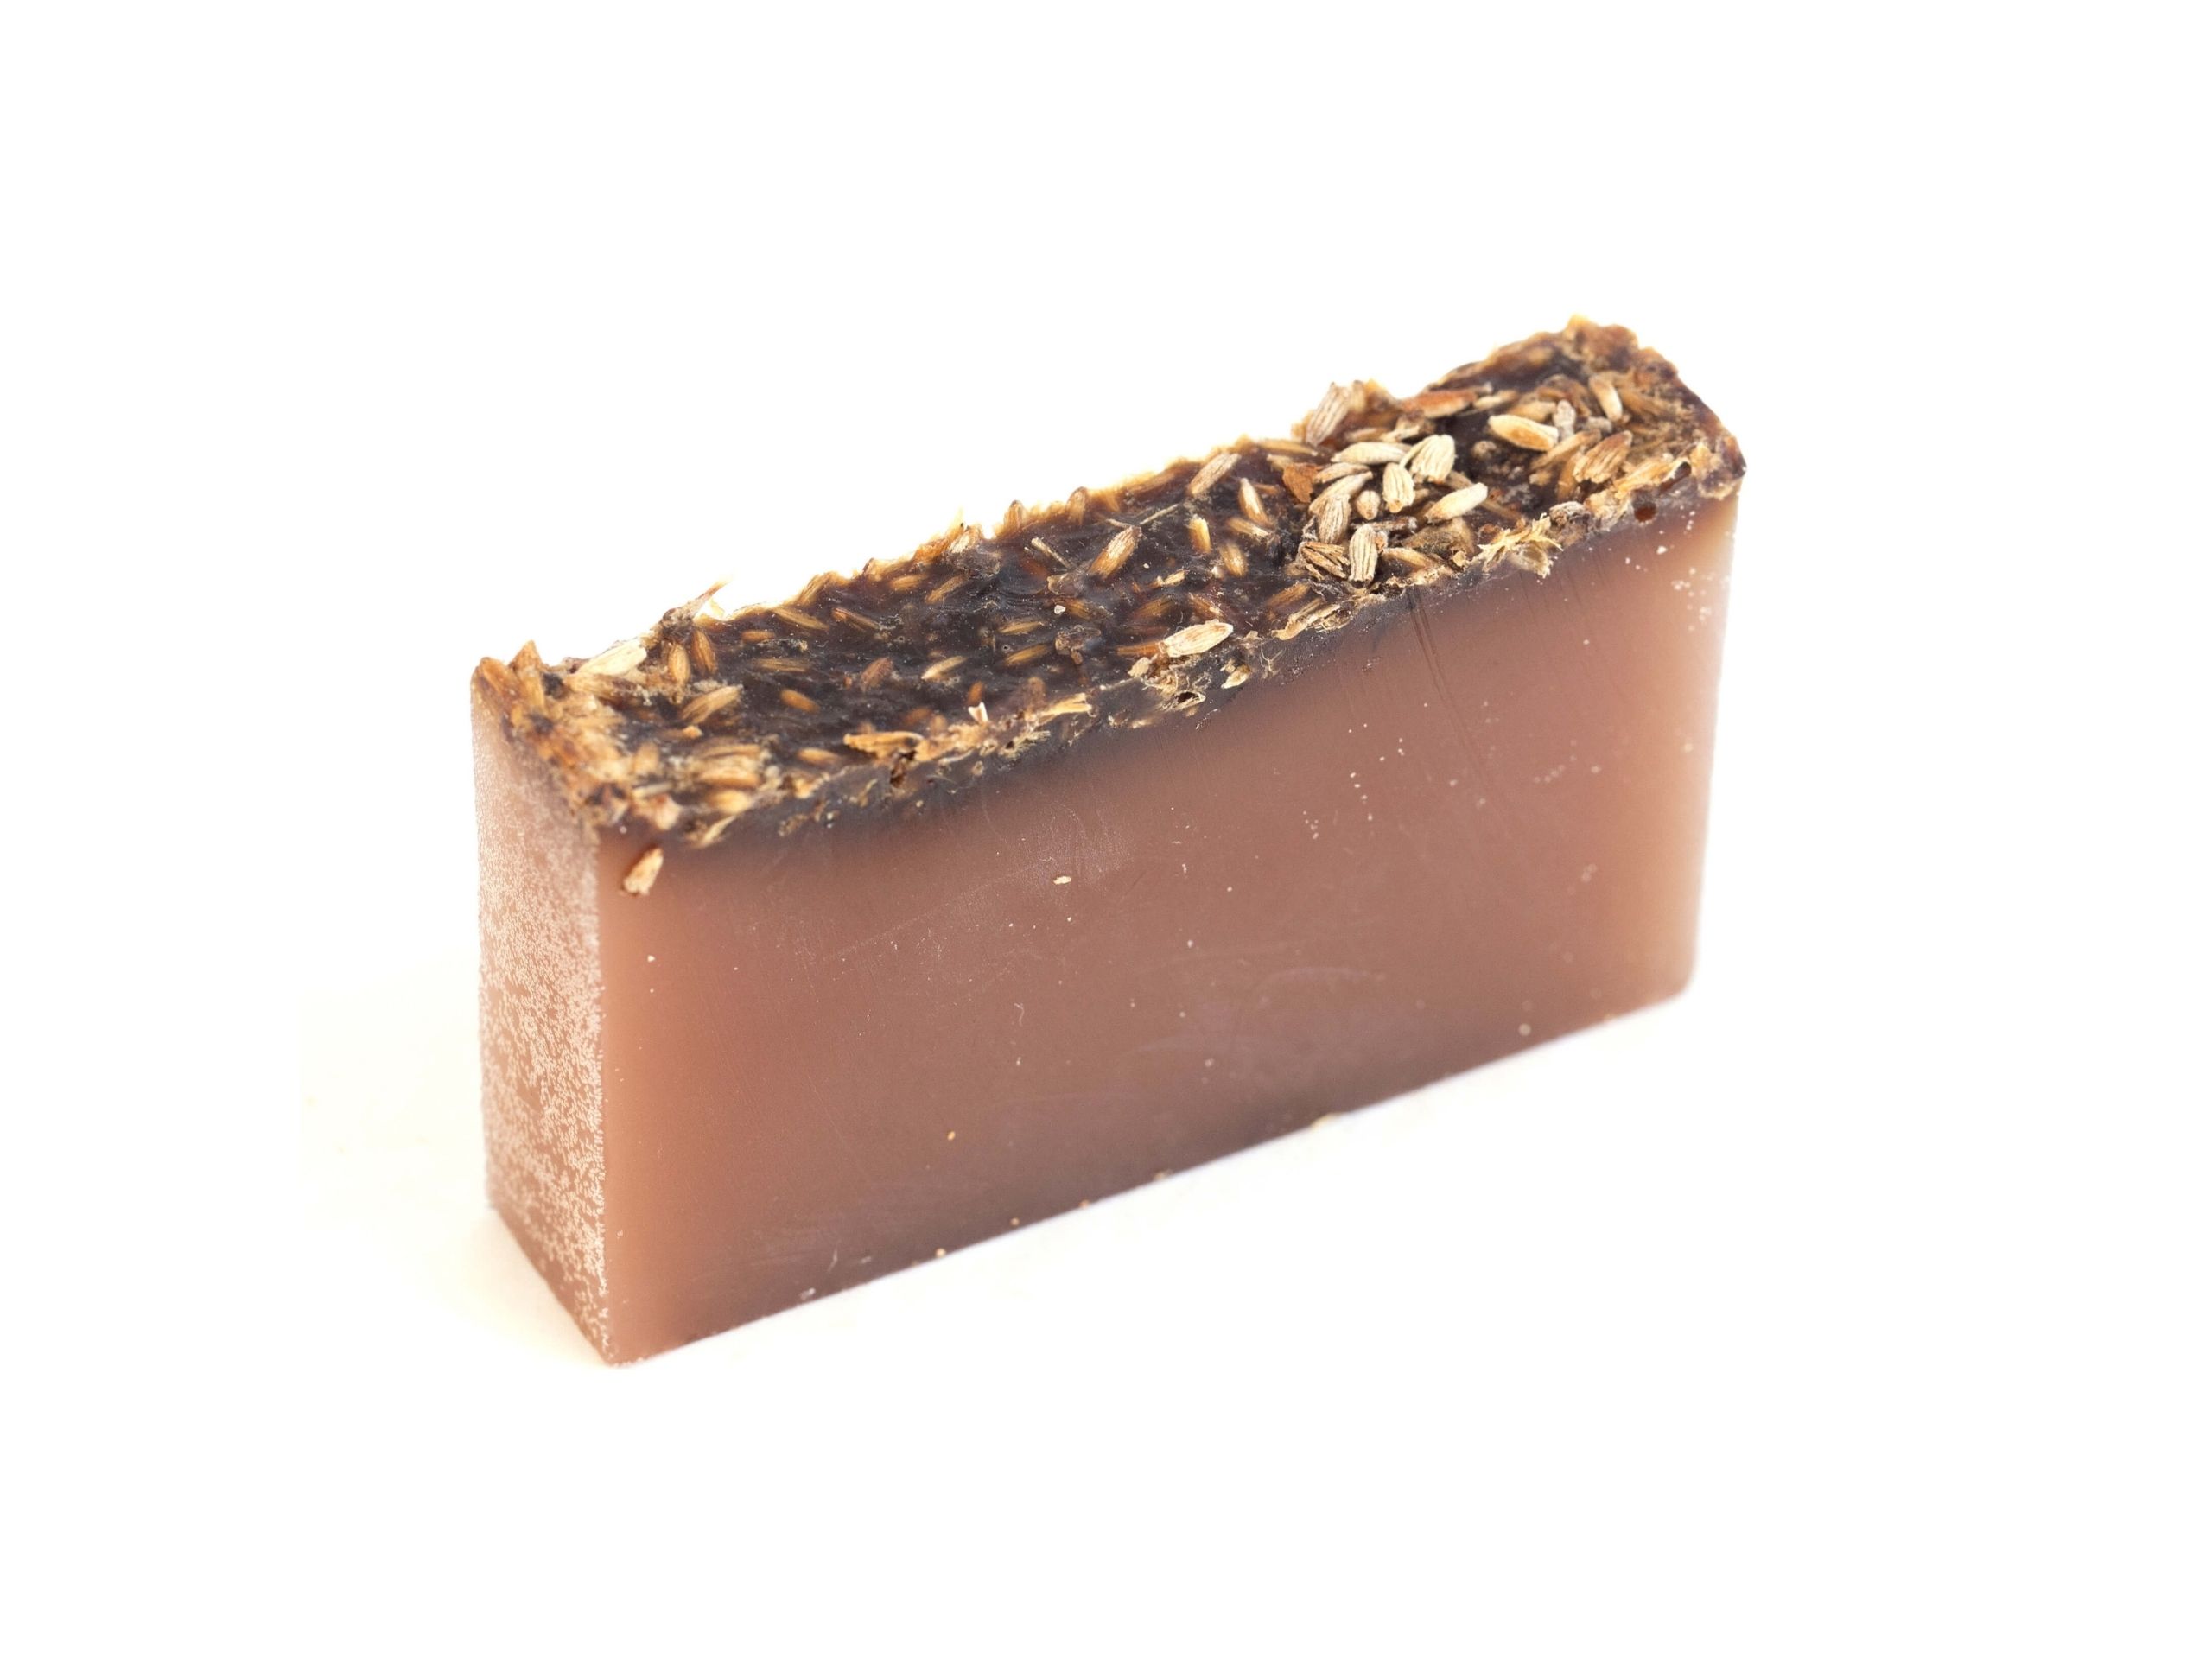 Lavender Essential Oil Organic Soap ( fresh cut slice)